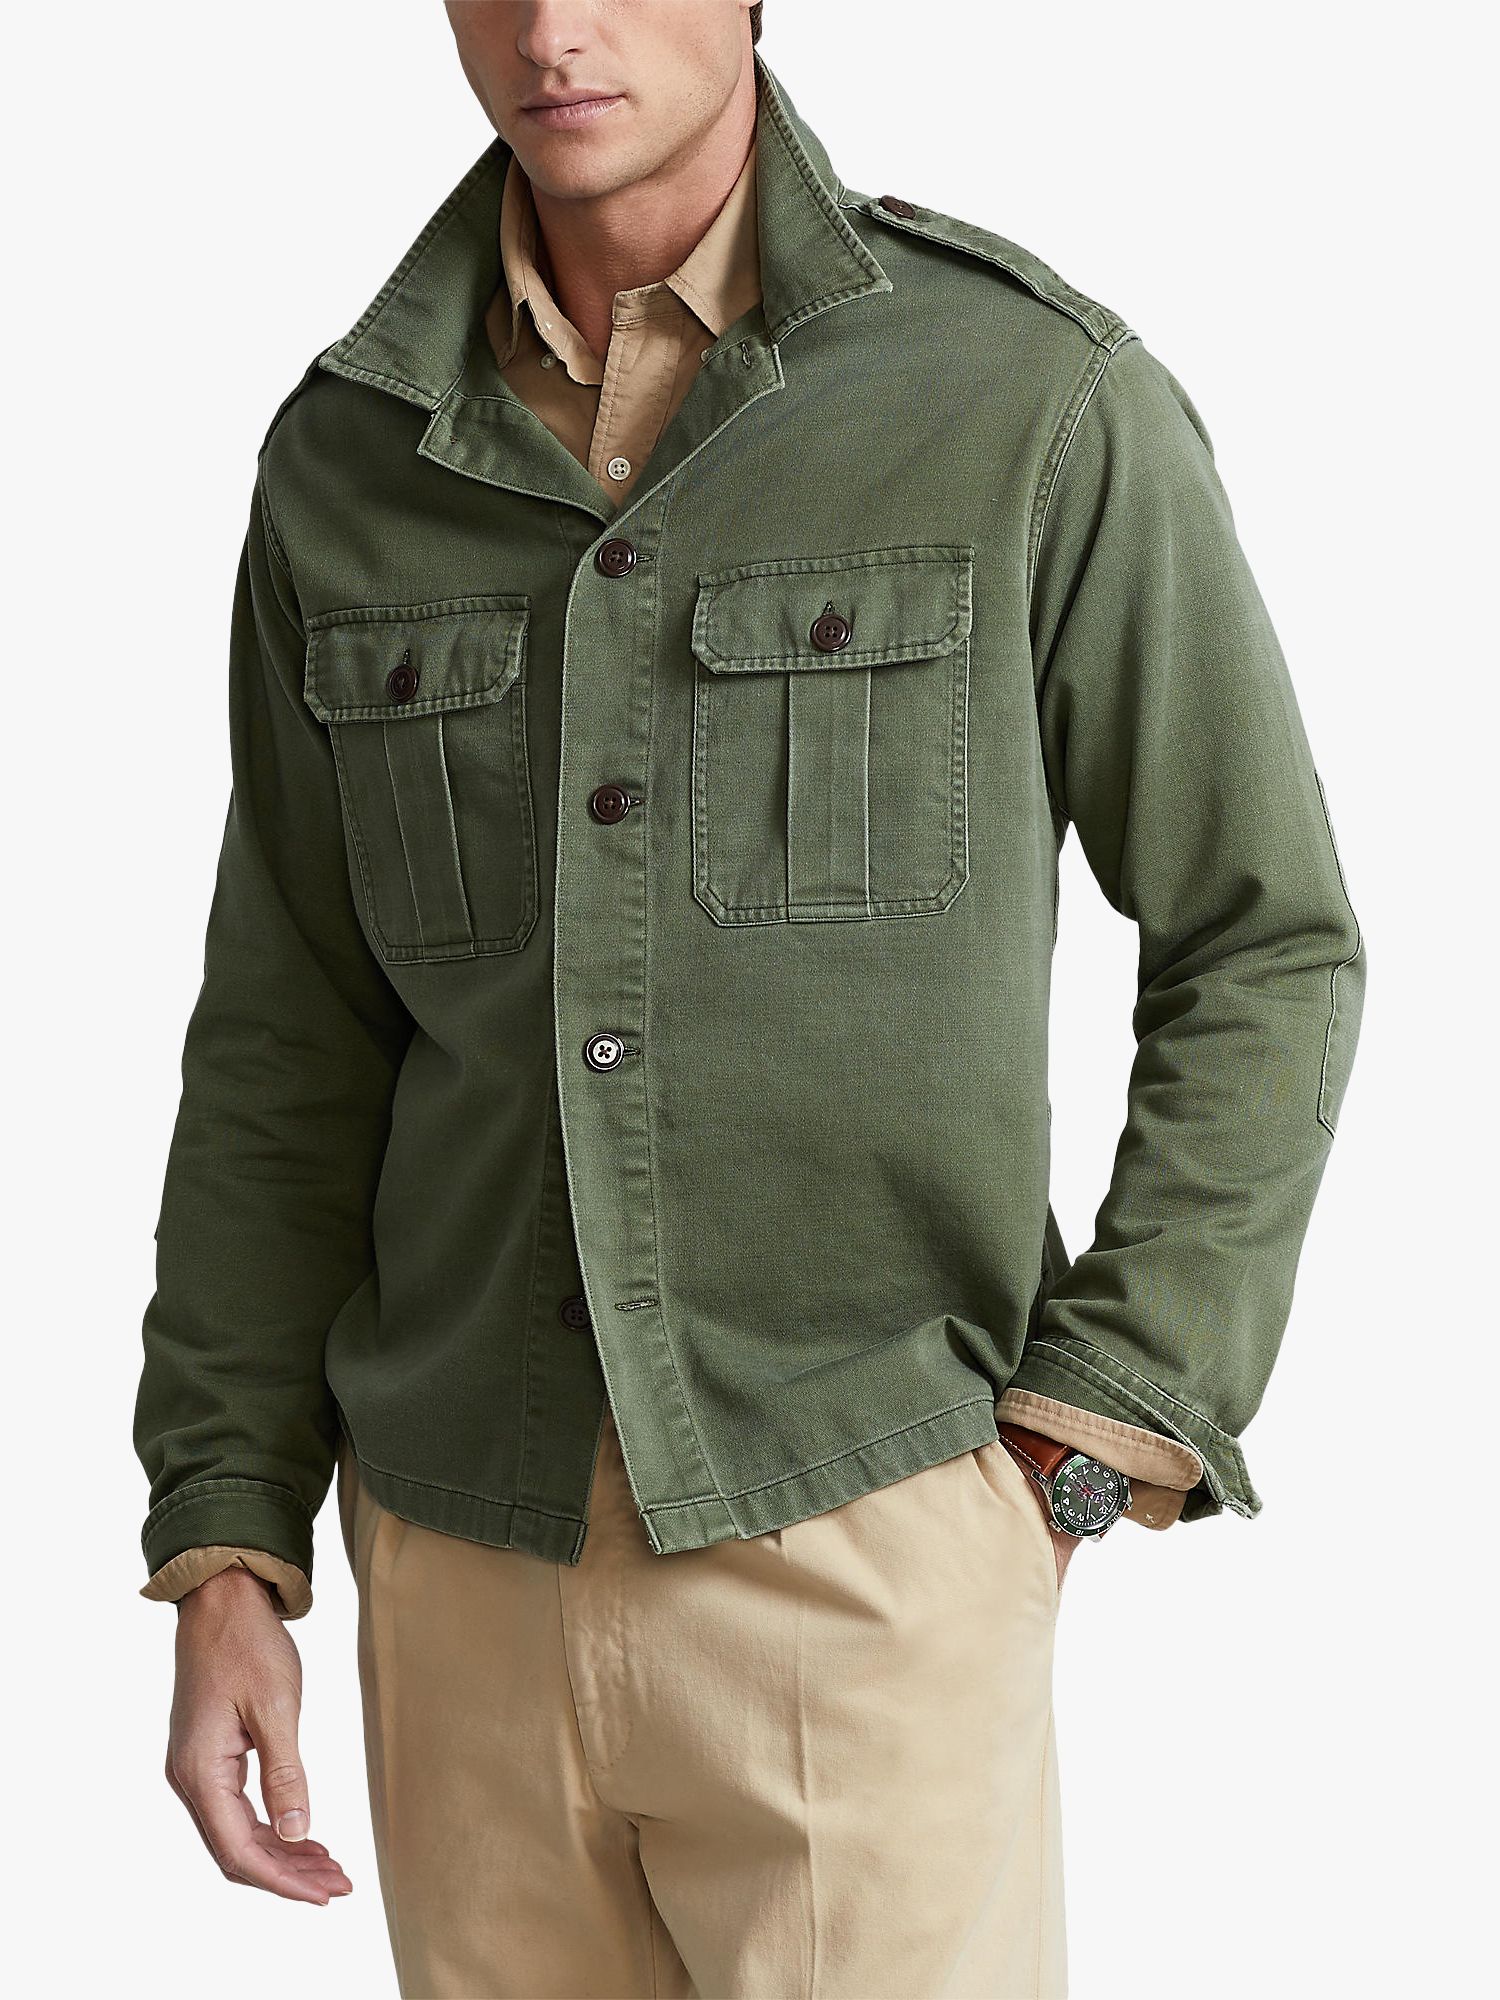 Ralph Lauren Polo Overshirt, Olive Green XXL male 100% cotton